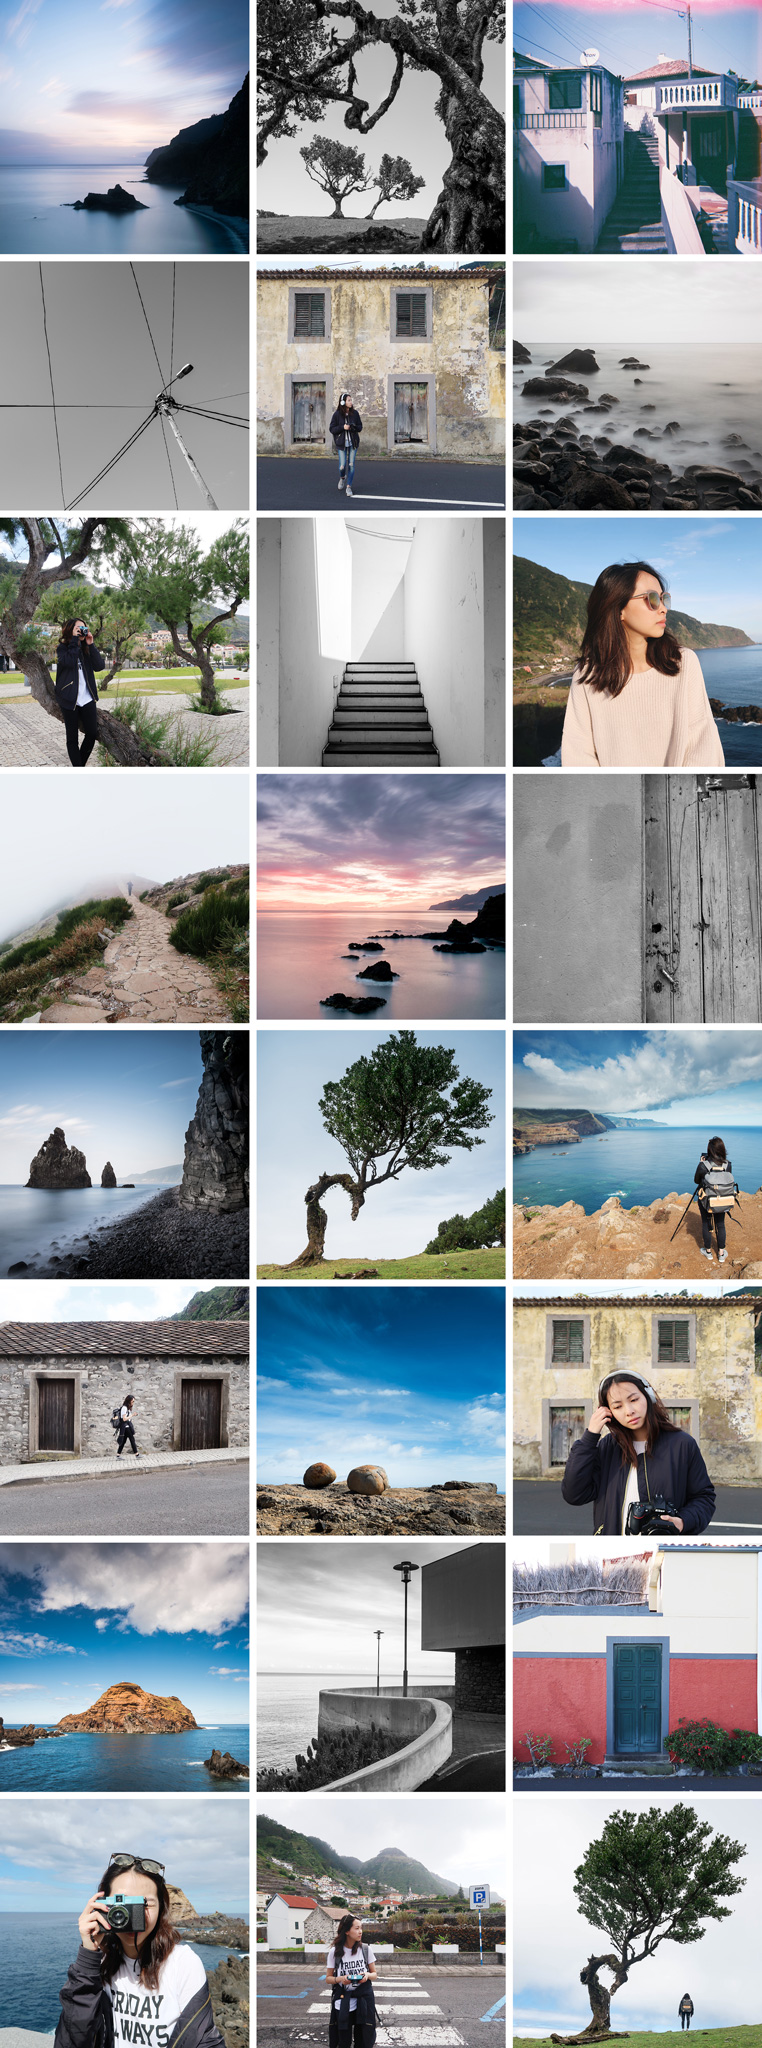 Madeira, Instagram, byjosechan